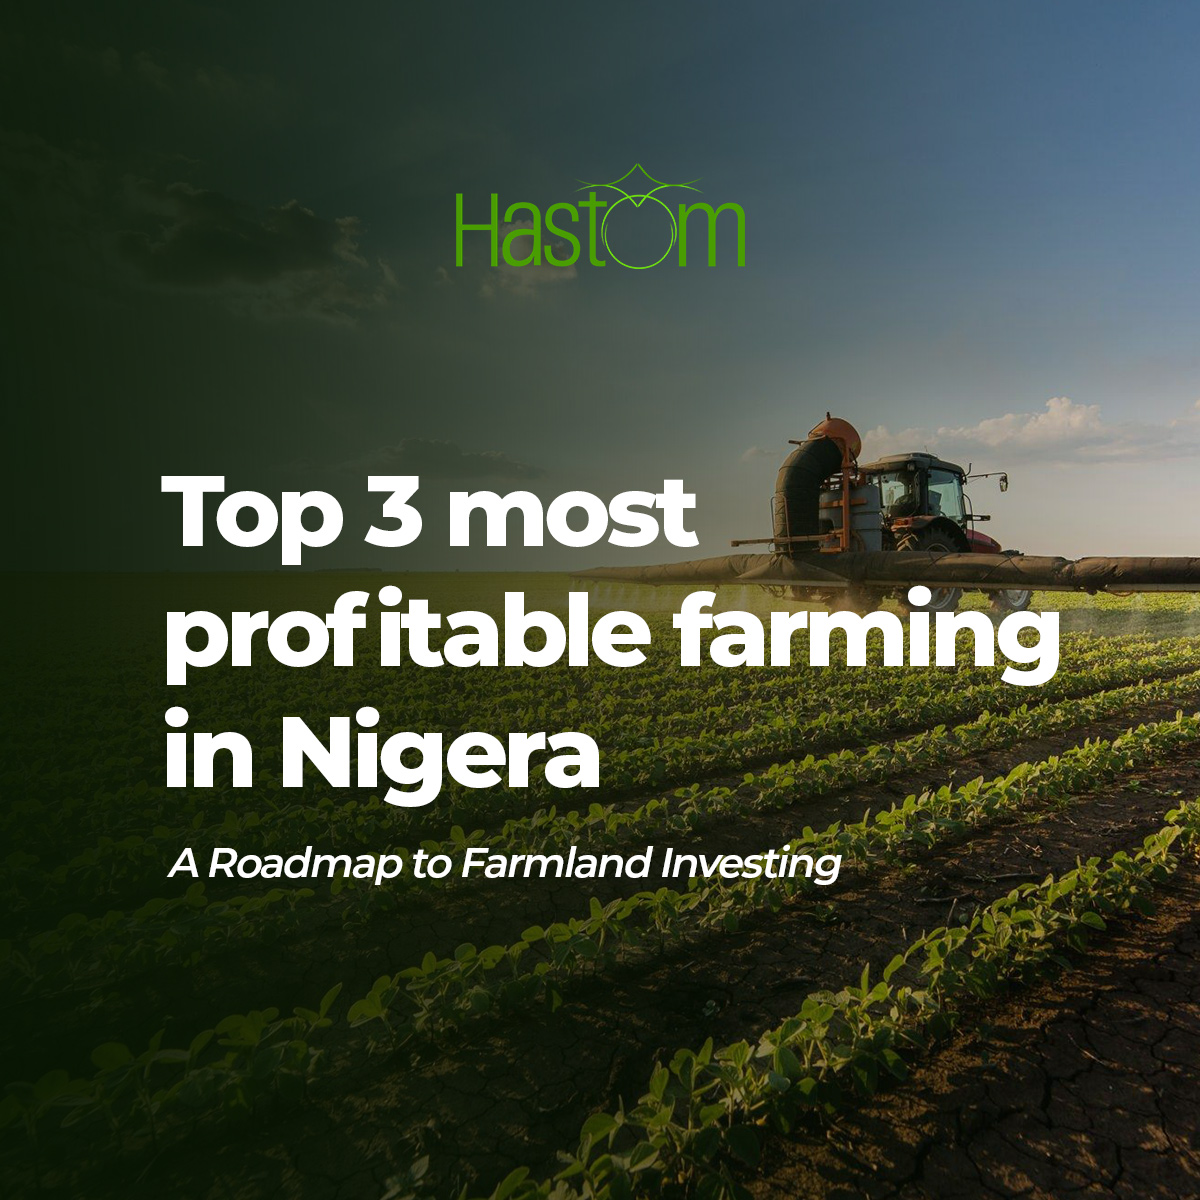 Top 3 most Profitable Farming In Nigeria